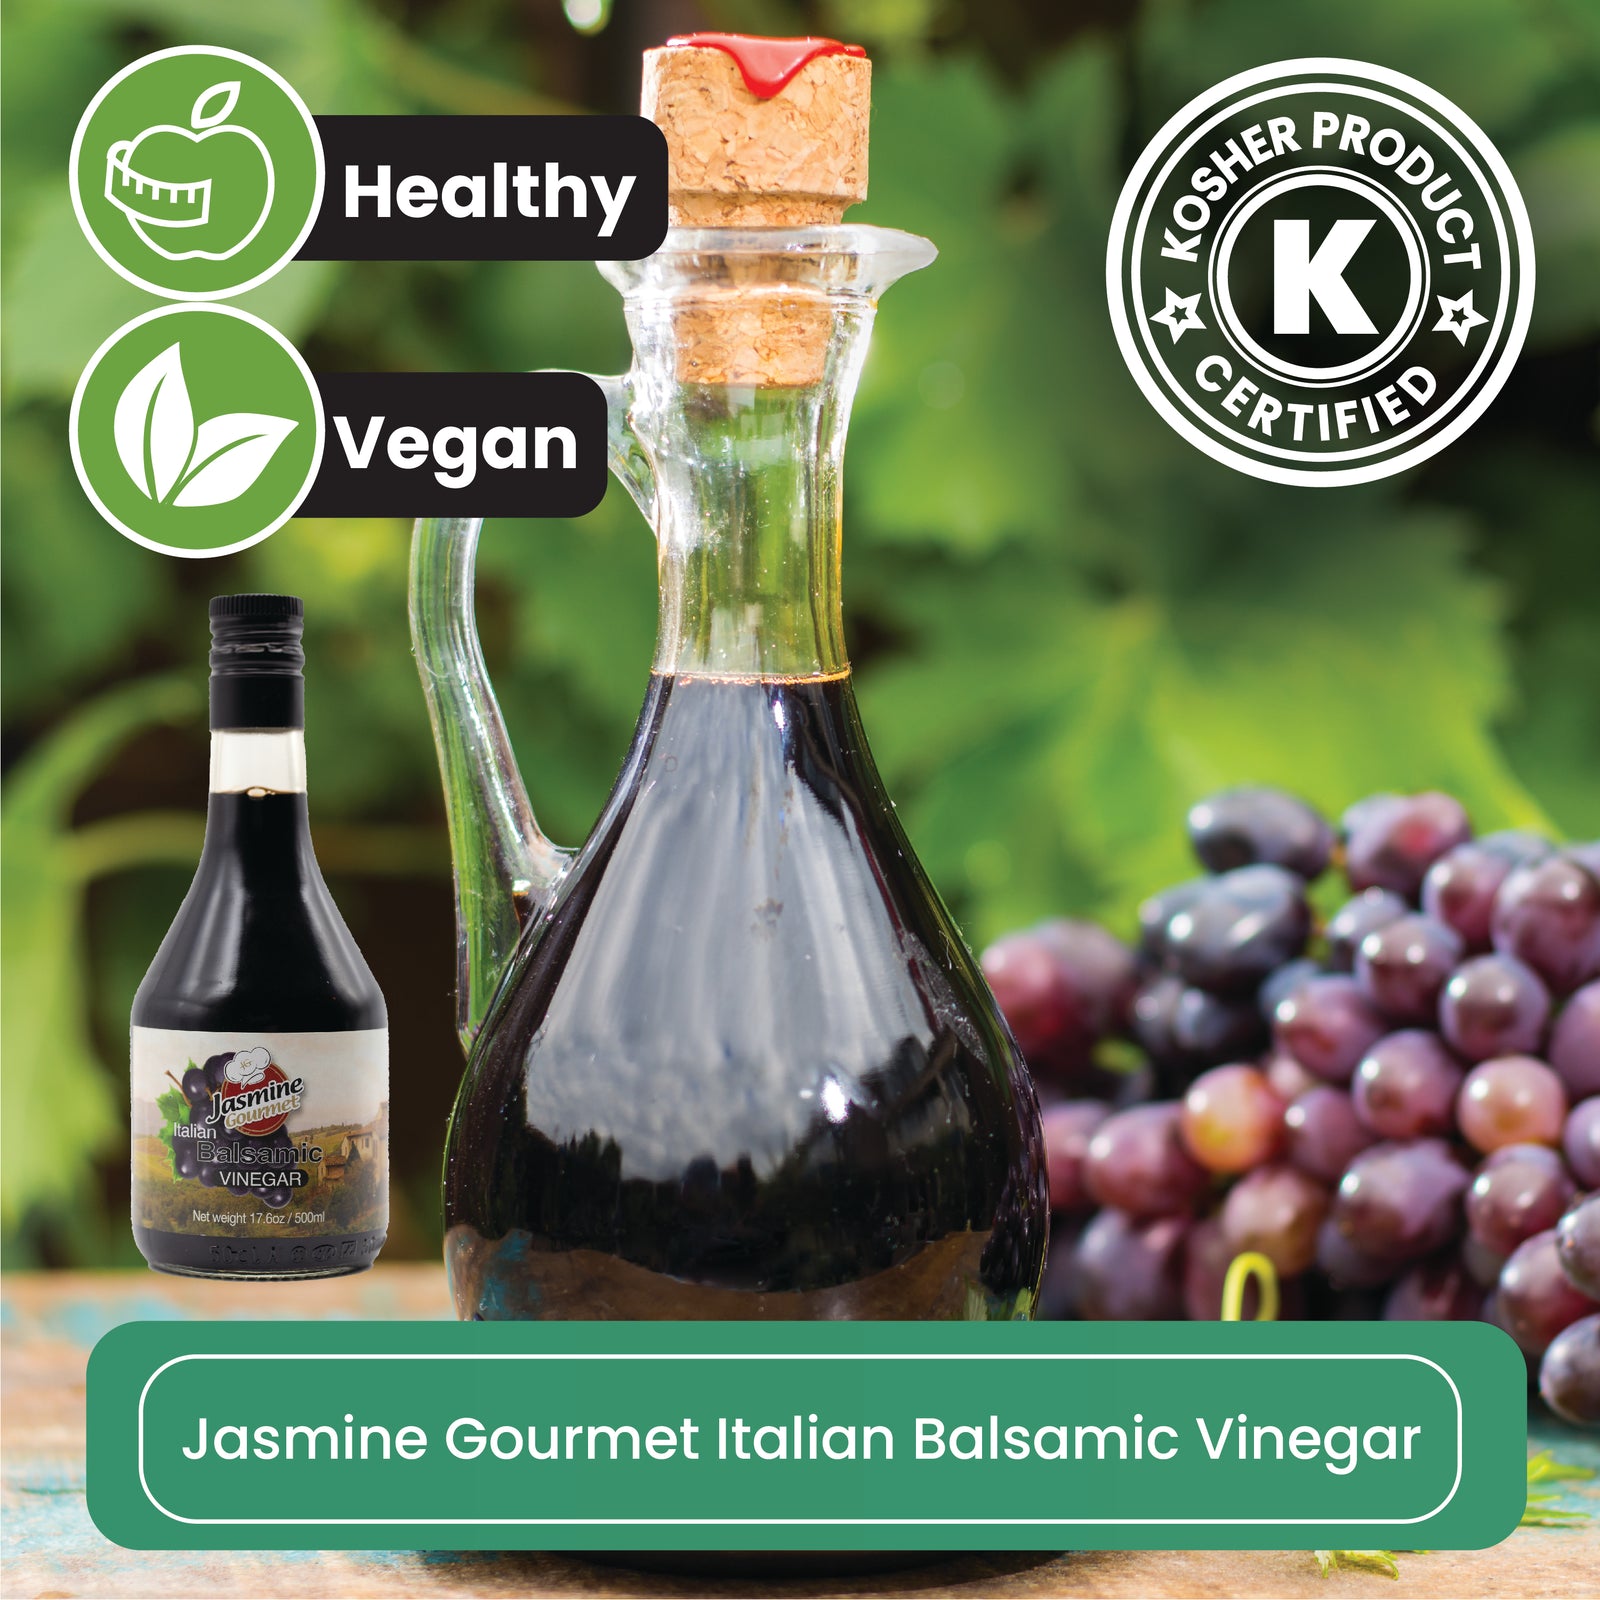 Jasmine Gourmet Italian Balsamic Vinegar